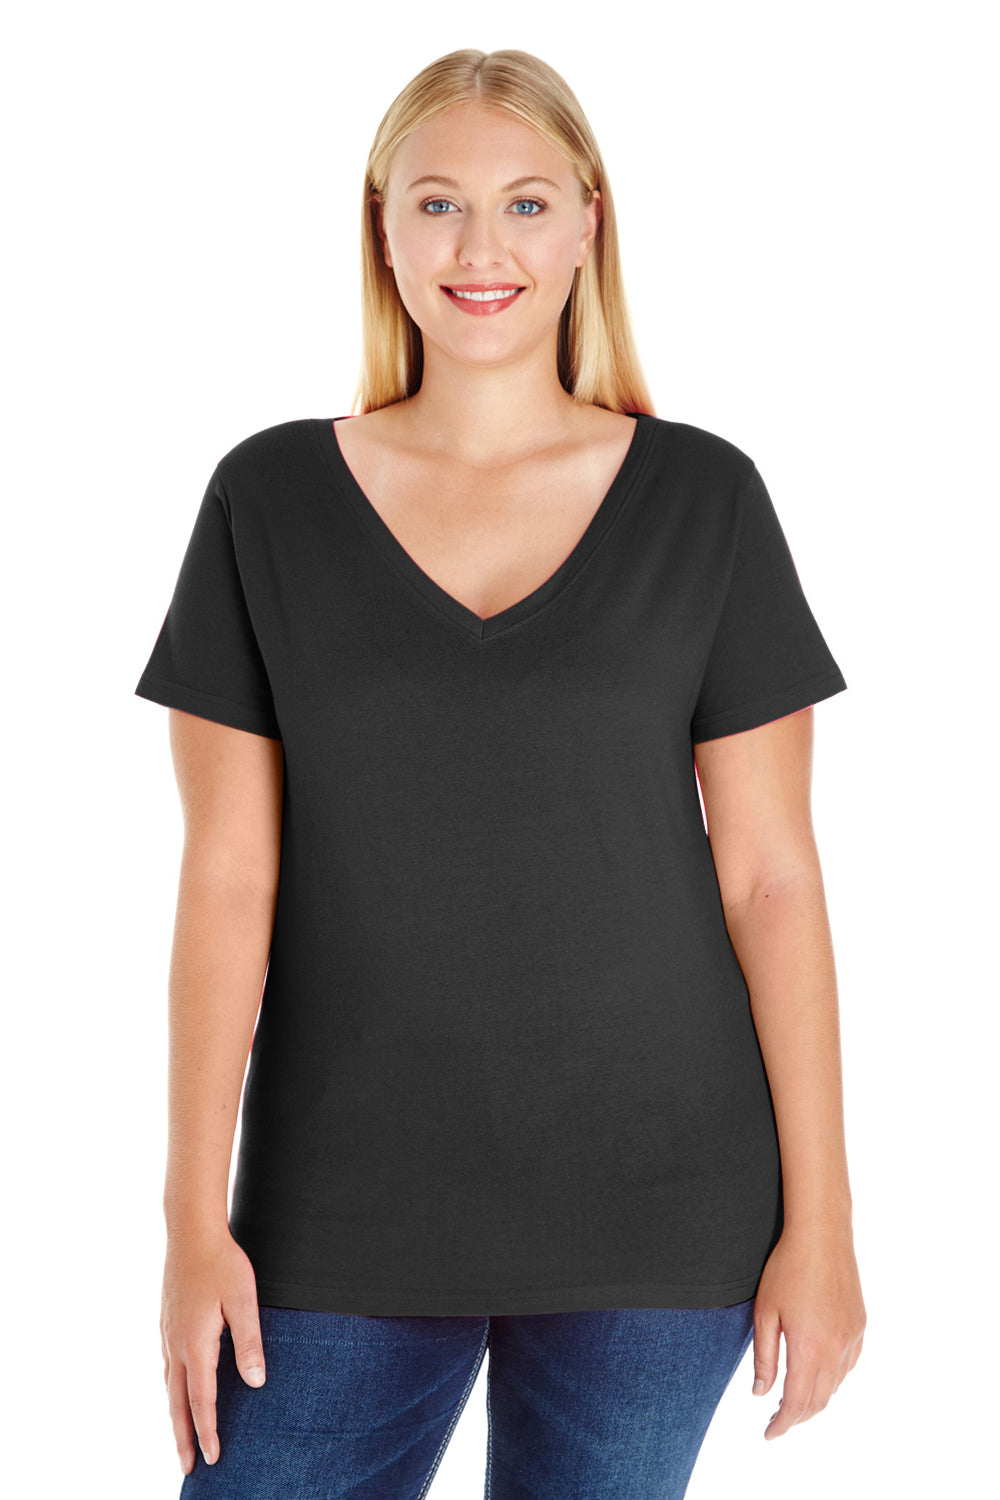 LAT 3807 Womens Premium Jersey Short Sleeve V-Neck T-Shirt Black Front